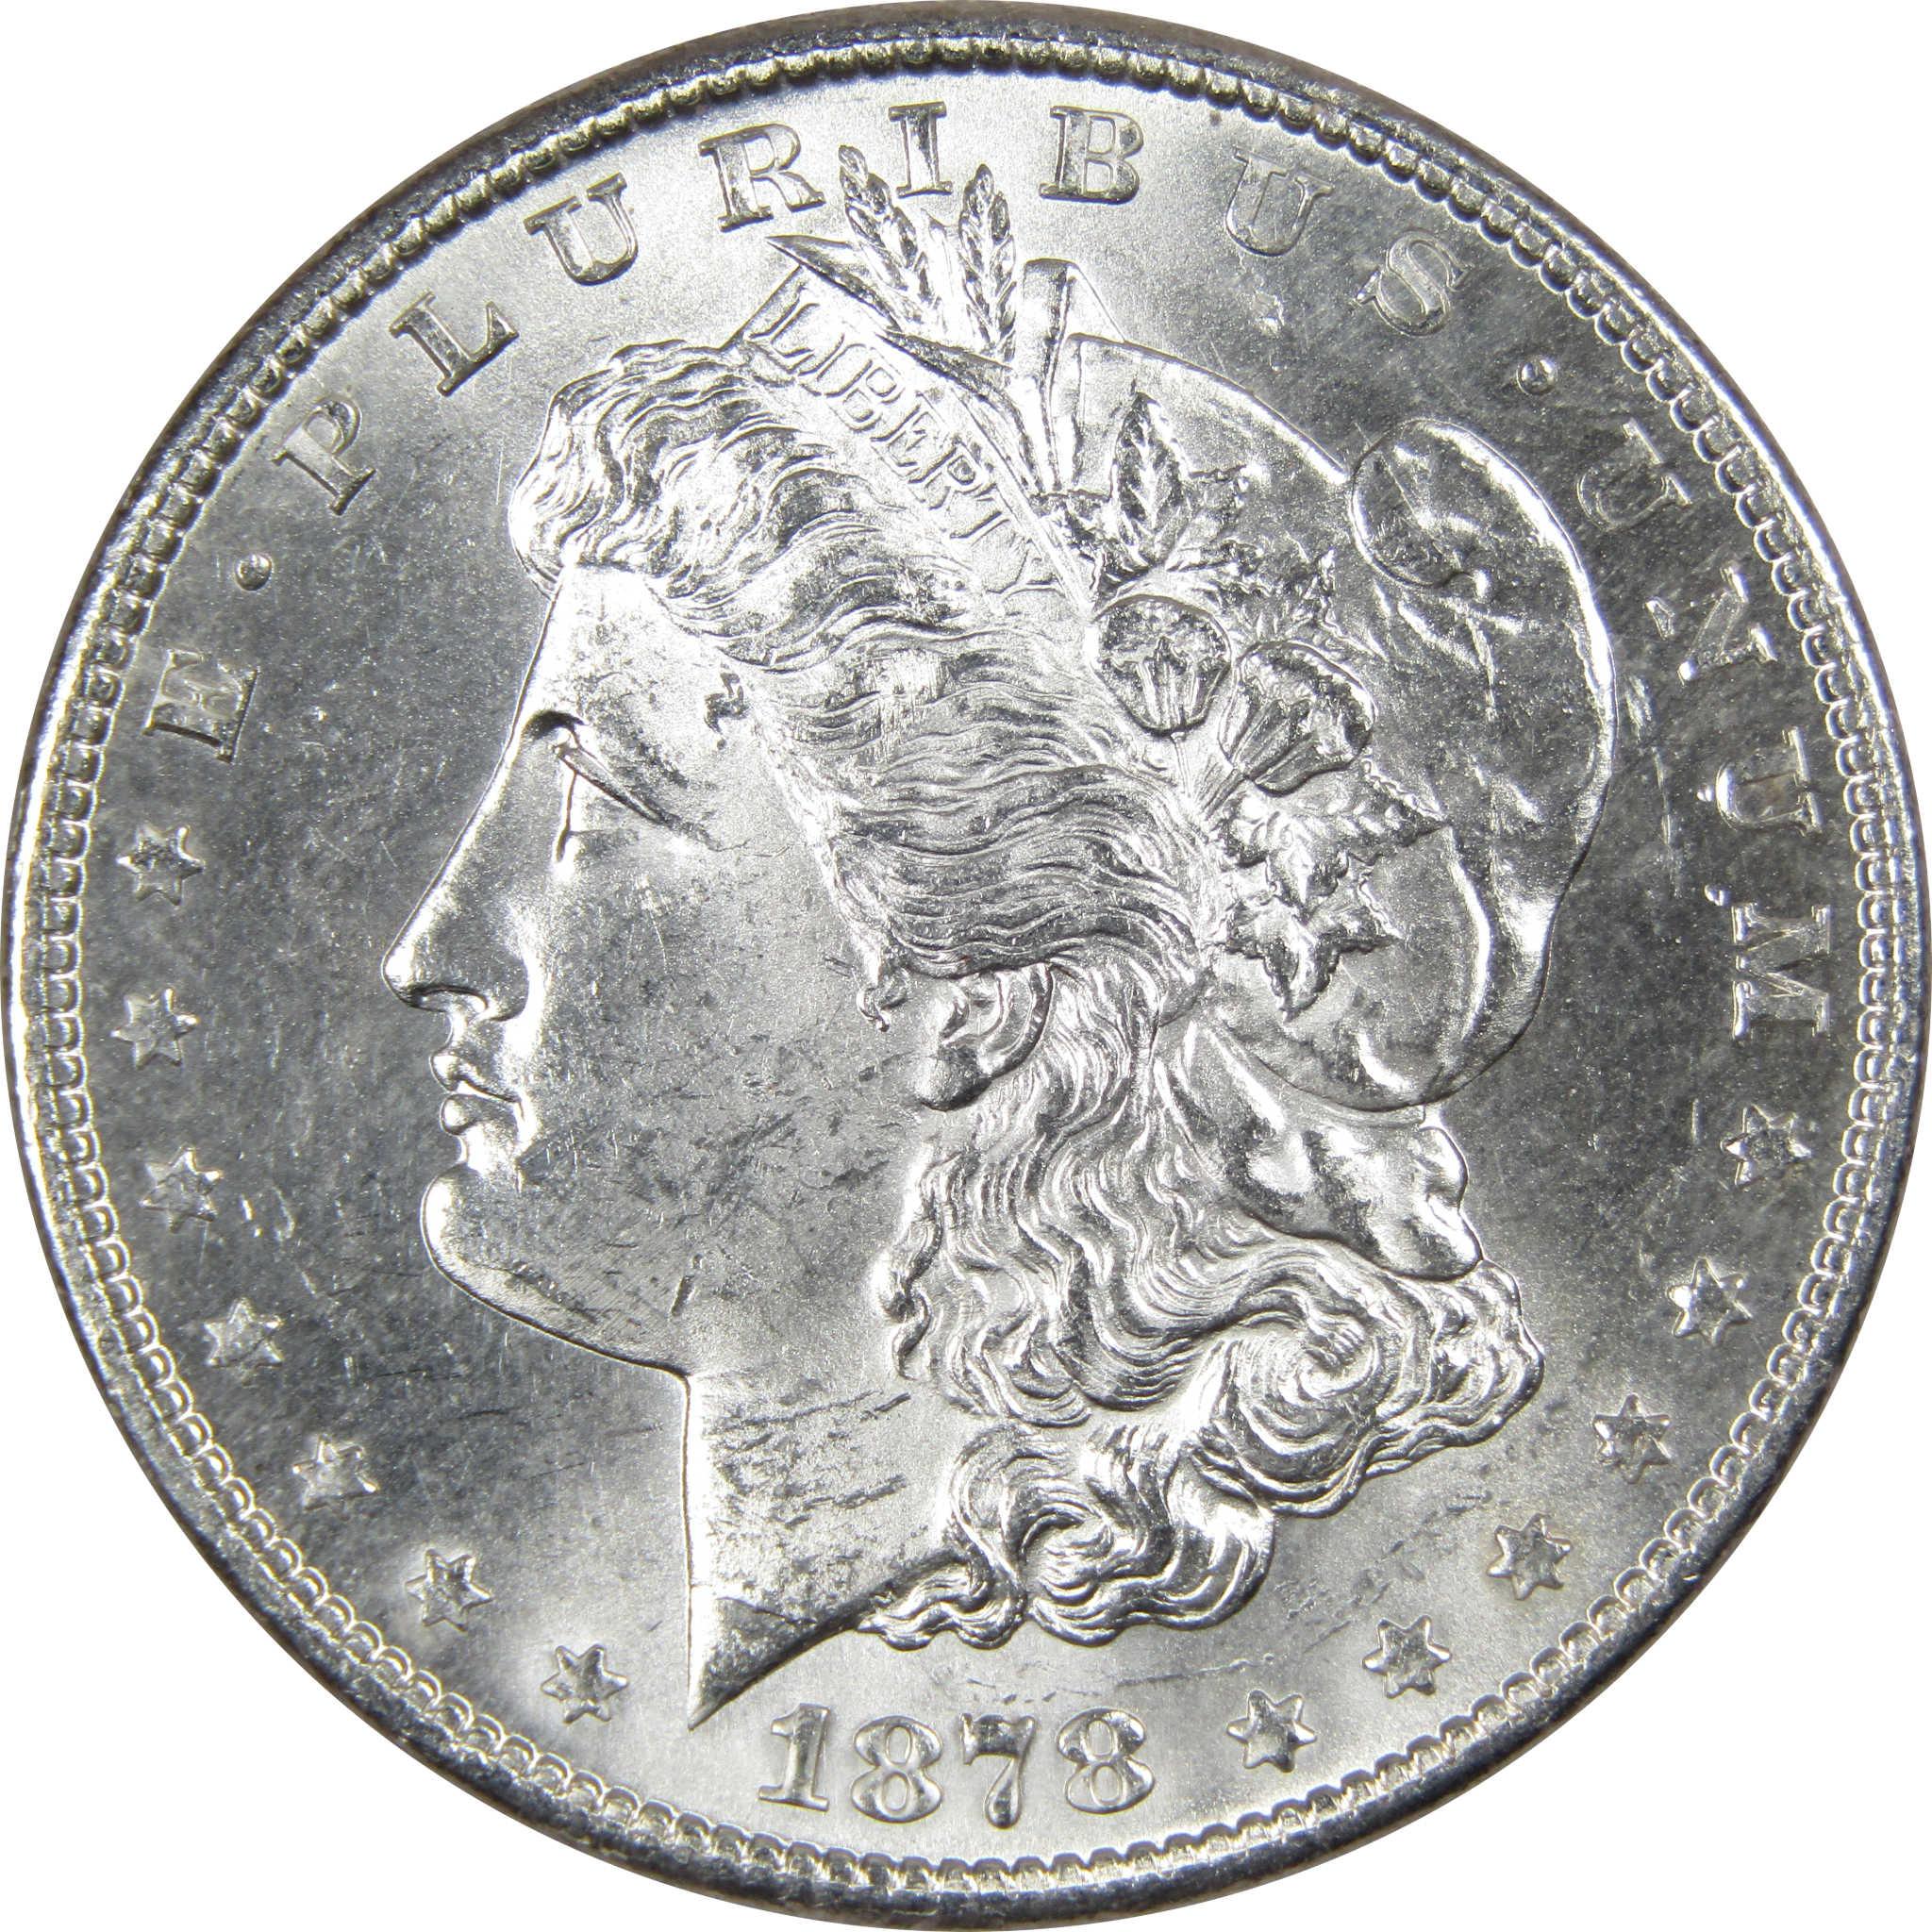 1878 S Morgan Dollar BU Uncirculated Mint State 90% Silver $1 US Coin - Morgan coin - Morgan silver dollar - Morgan silver dollar for sale - Profile Coins &amp; Collectibles